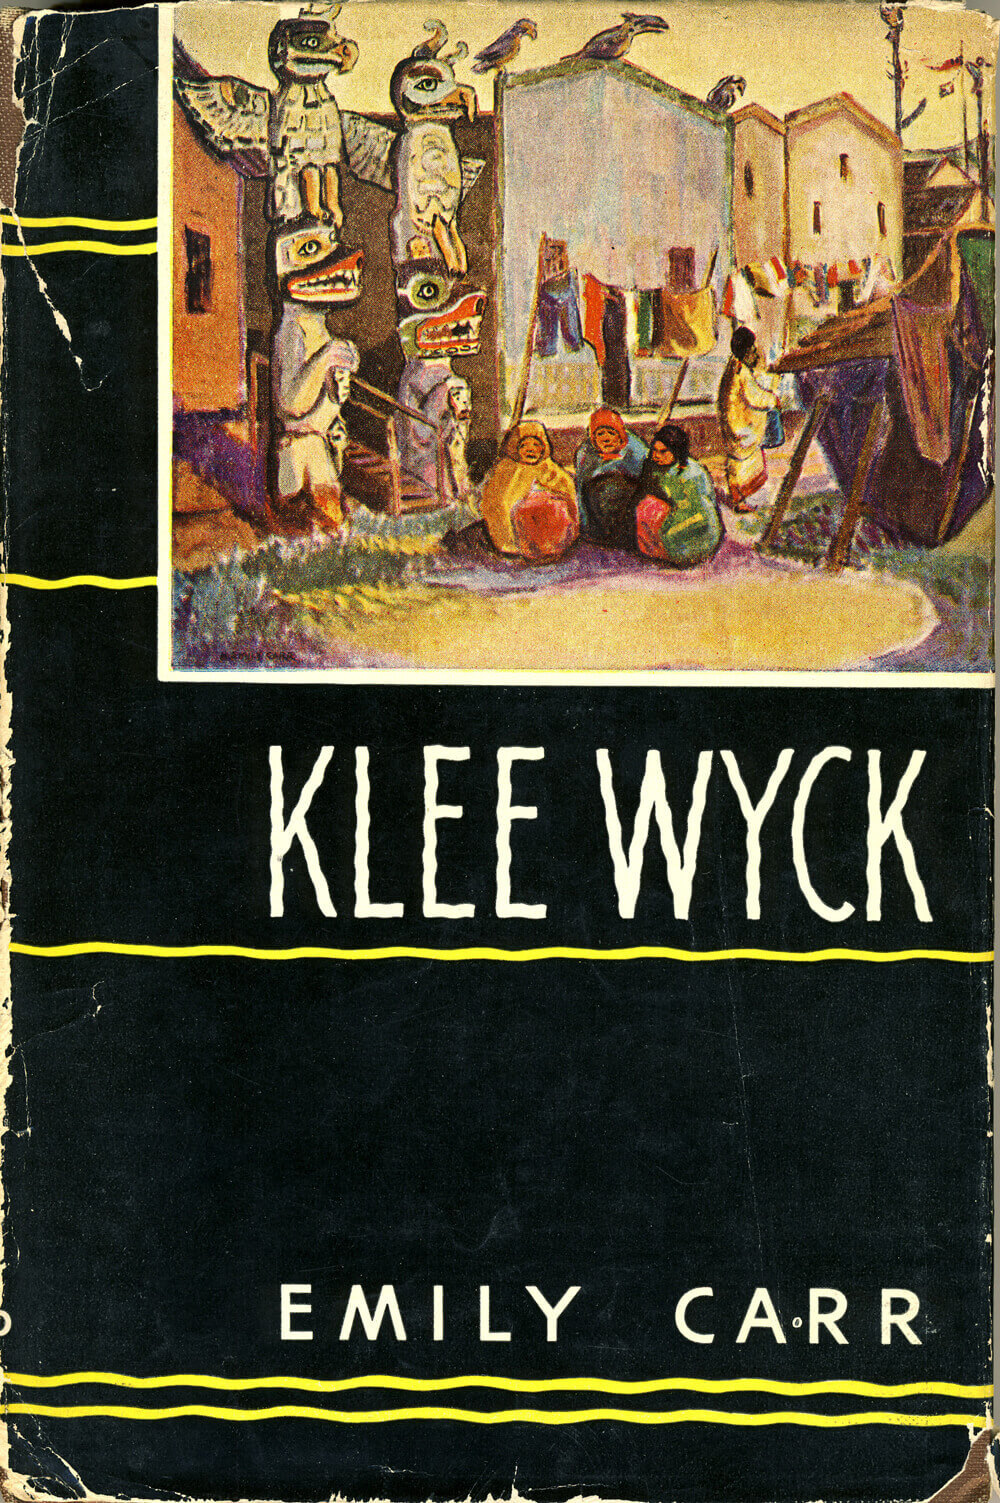 Art Canada Institute, Emily Carr, Klee Wyck, 1941